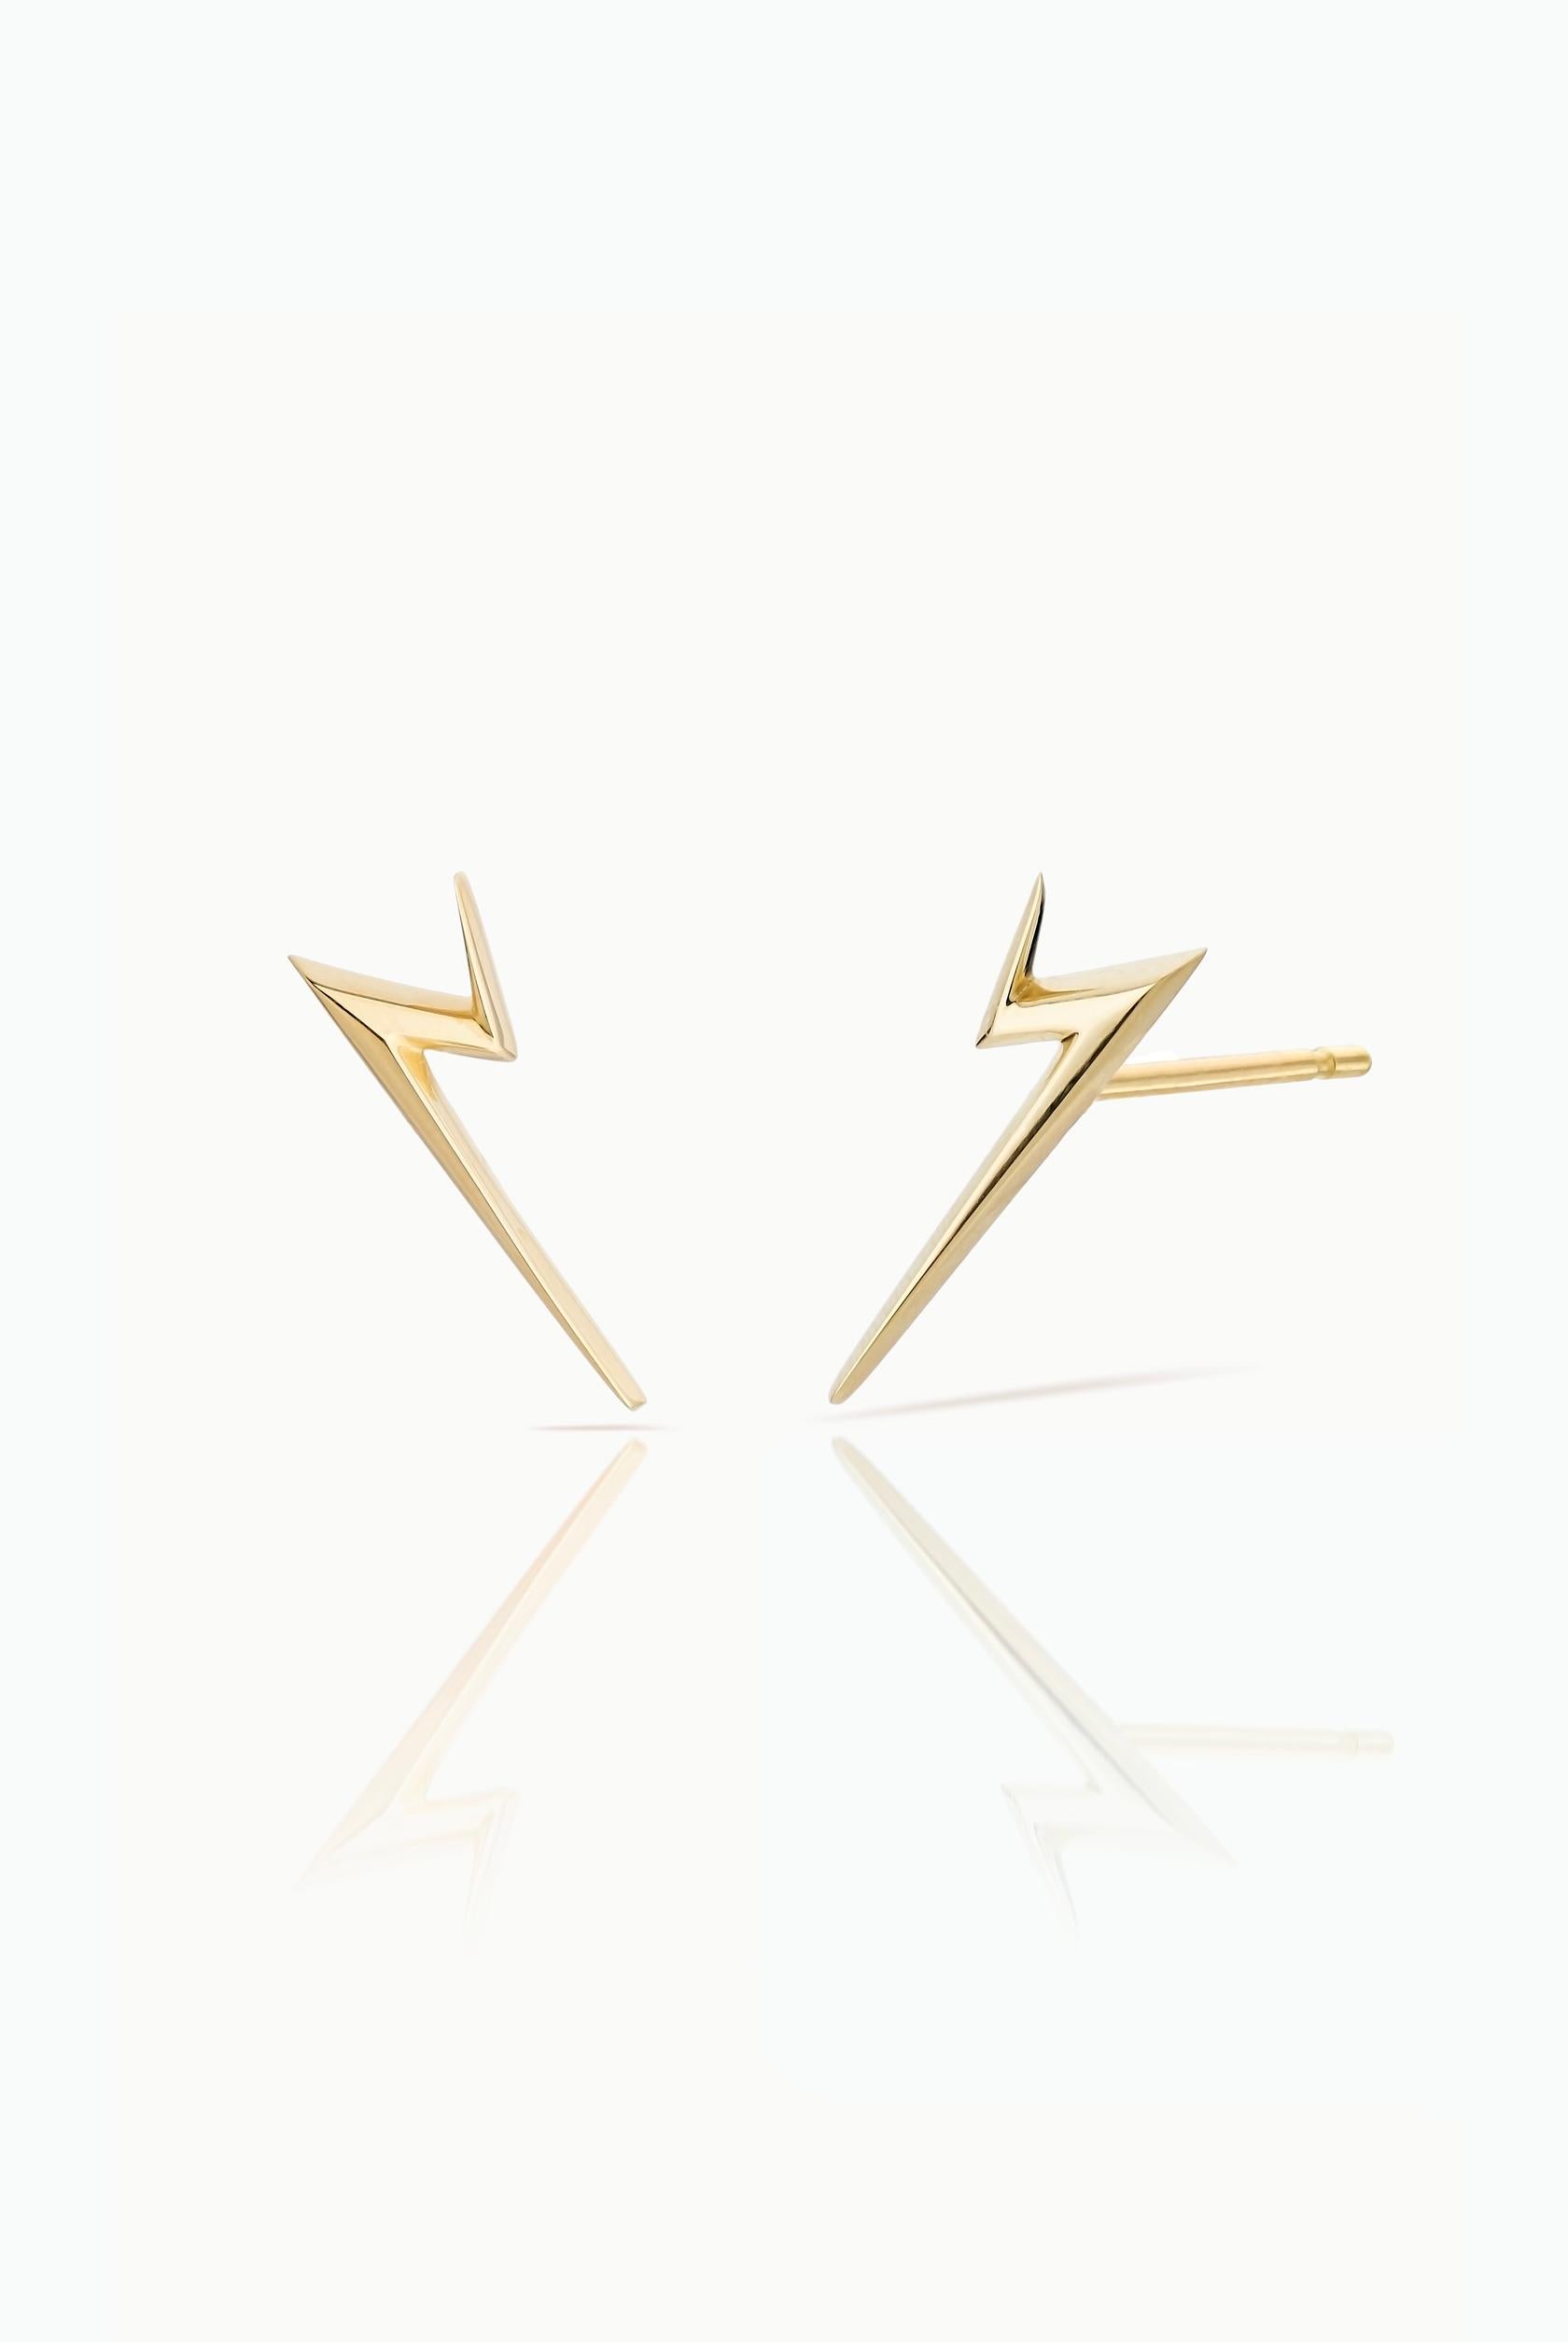 Art Deco Le Ster Modern Diamond Pave Long Earrings 18K yellow  gold For Sale